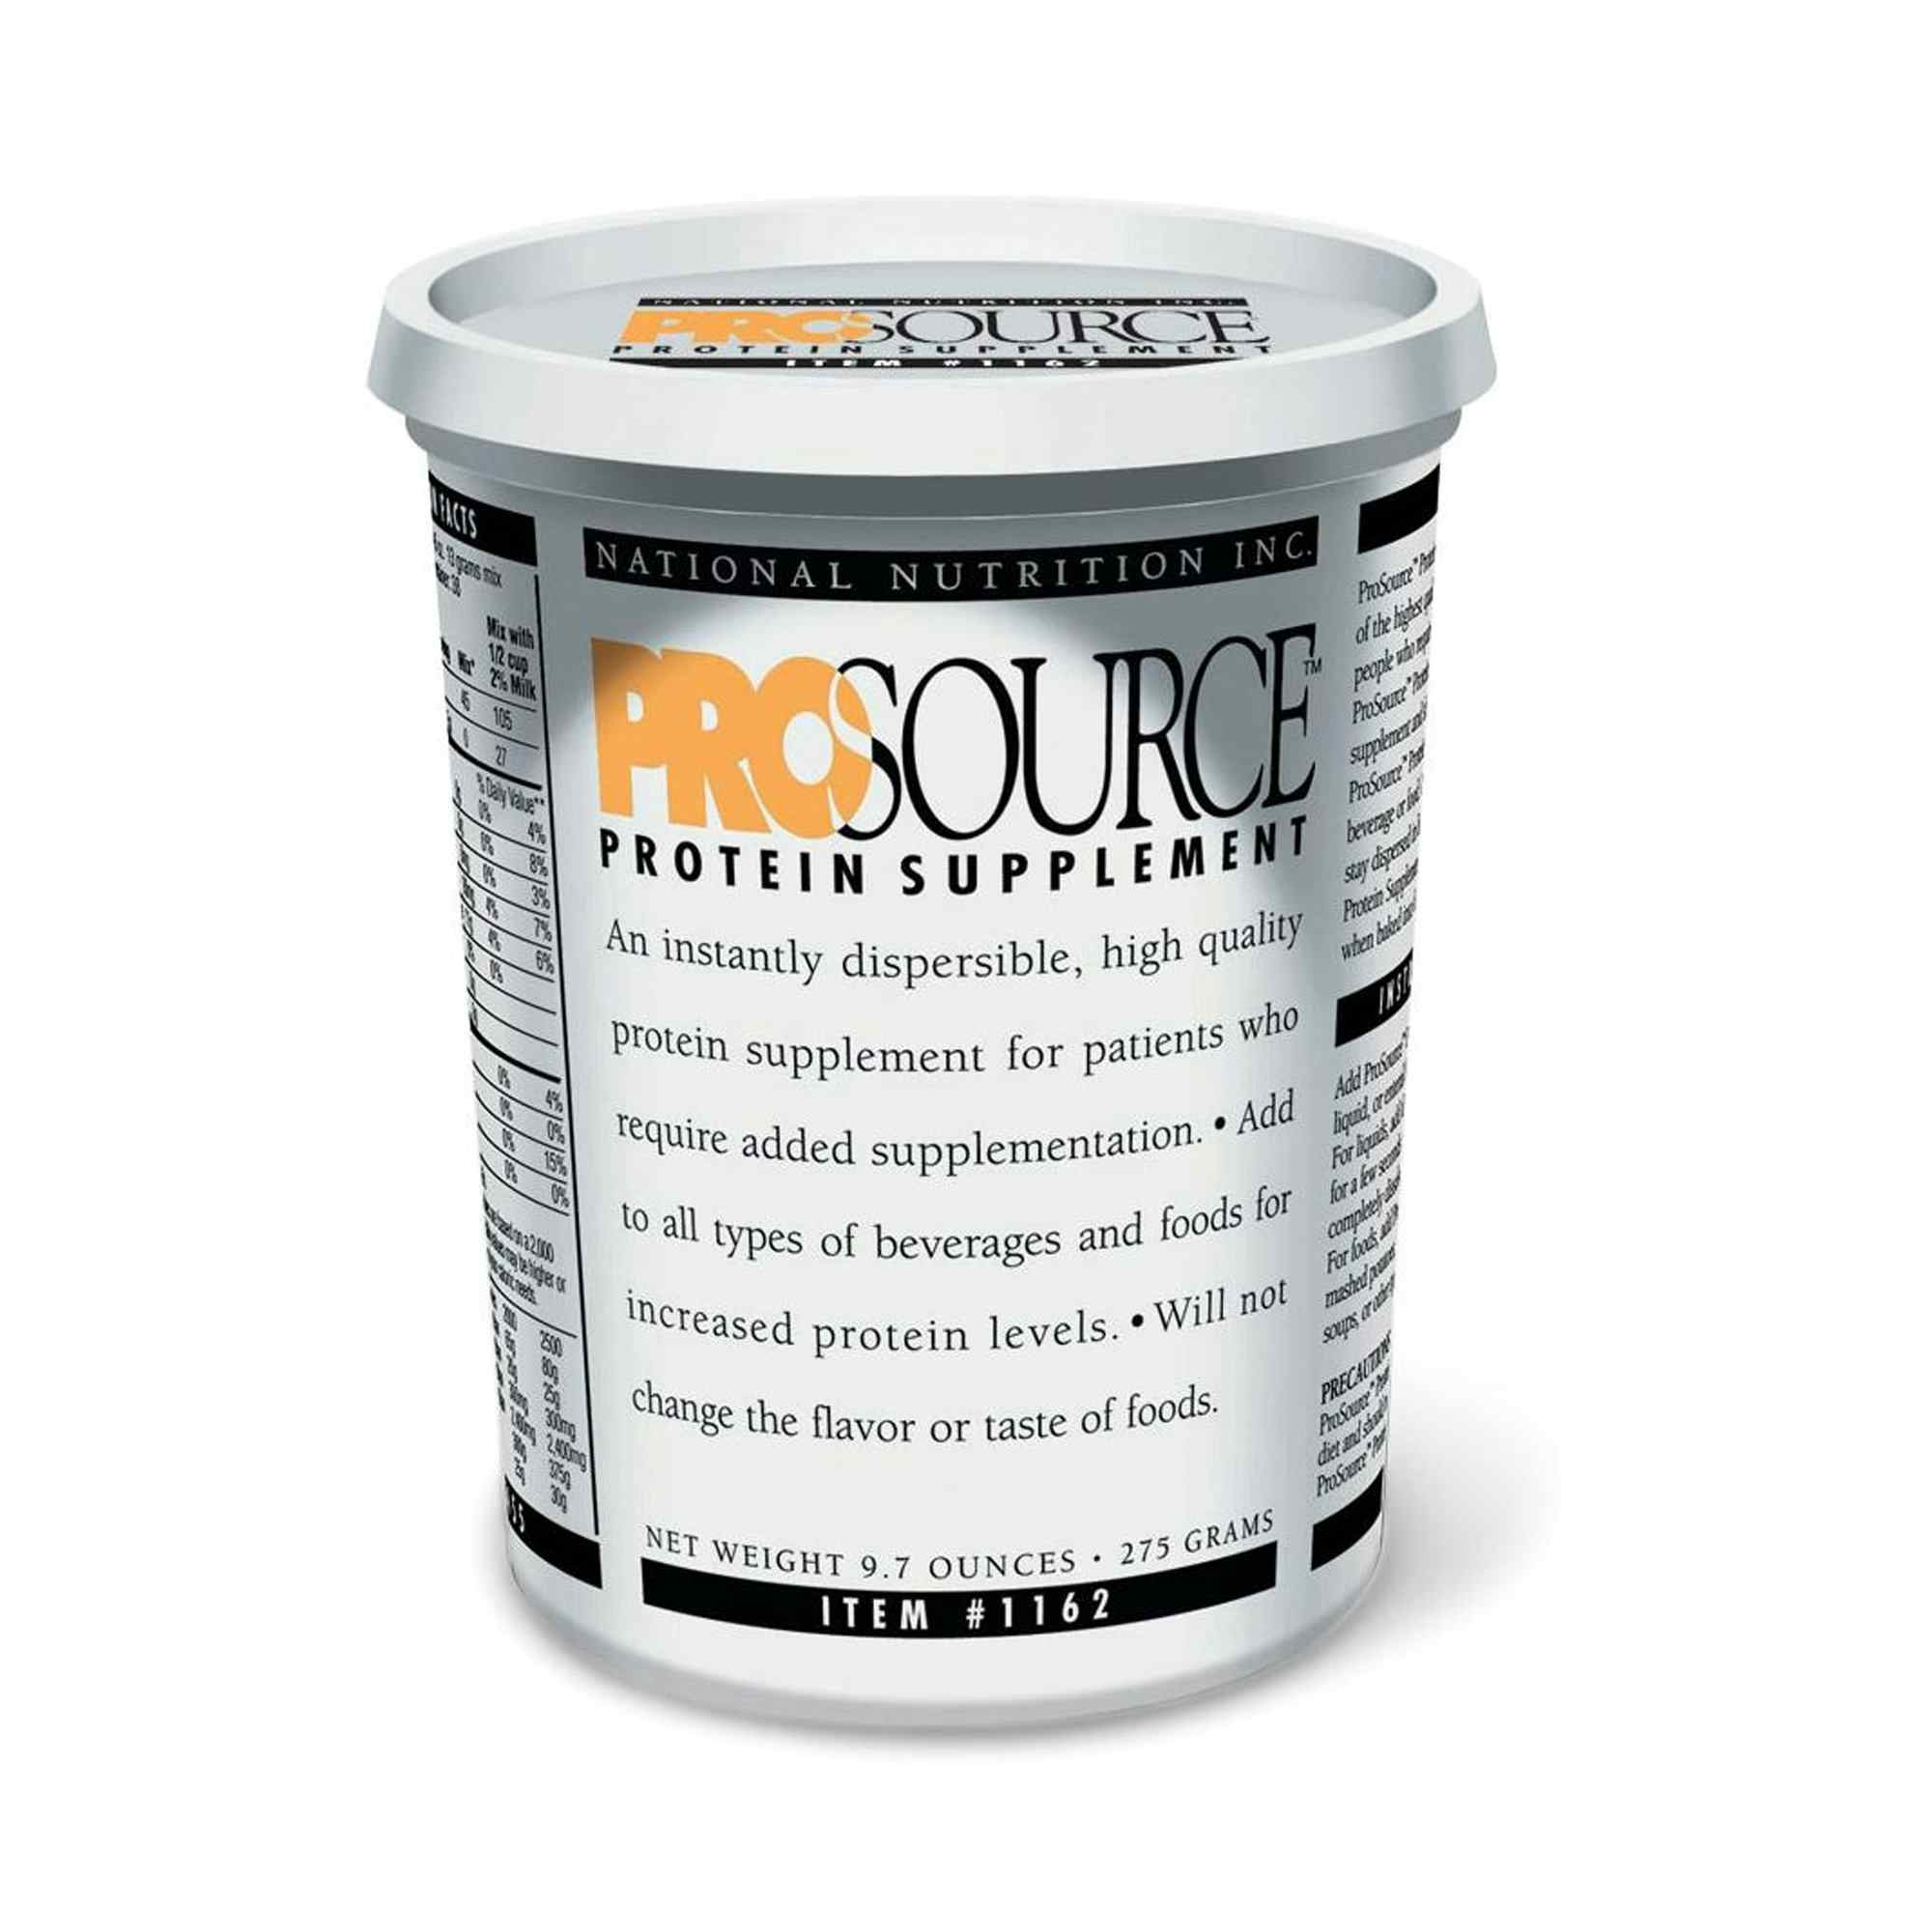 ProSource Protein Supplement, Unflavored, 9.7 oz., 11162, Case of 6